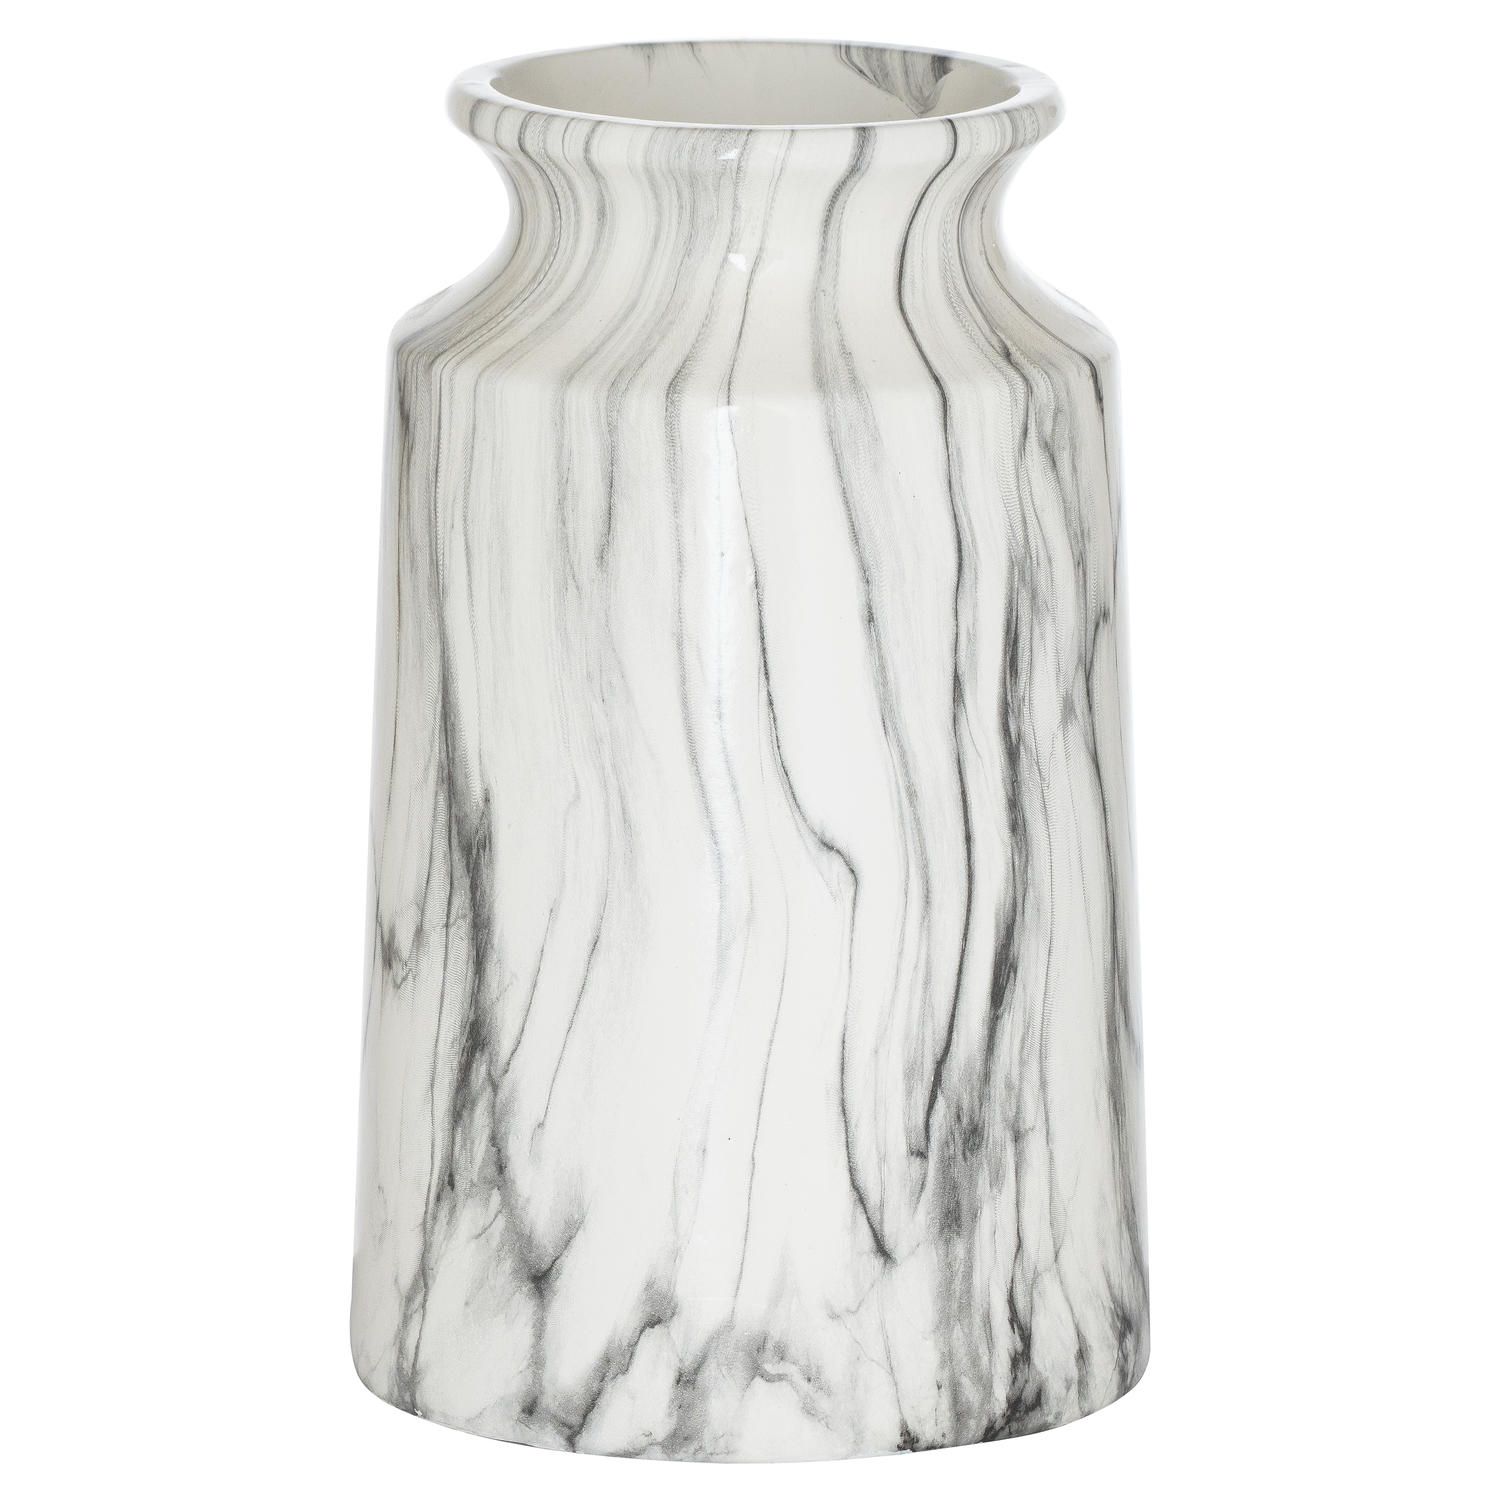 Marble Urn Vase - Image 1